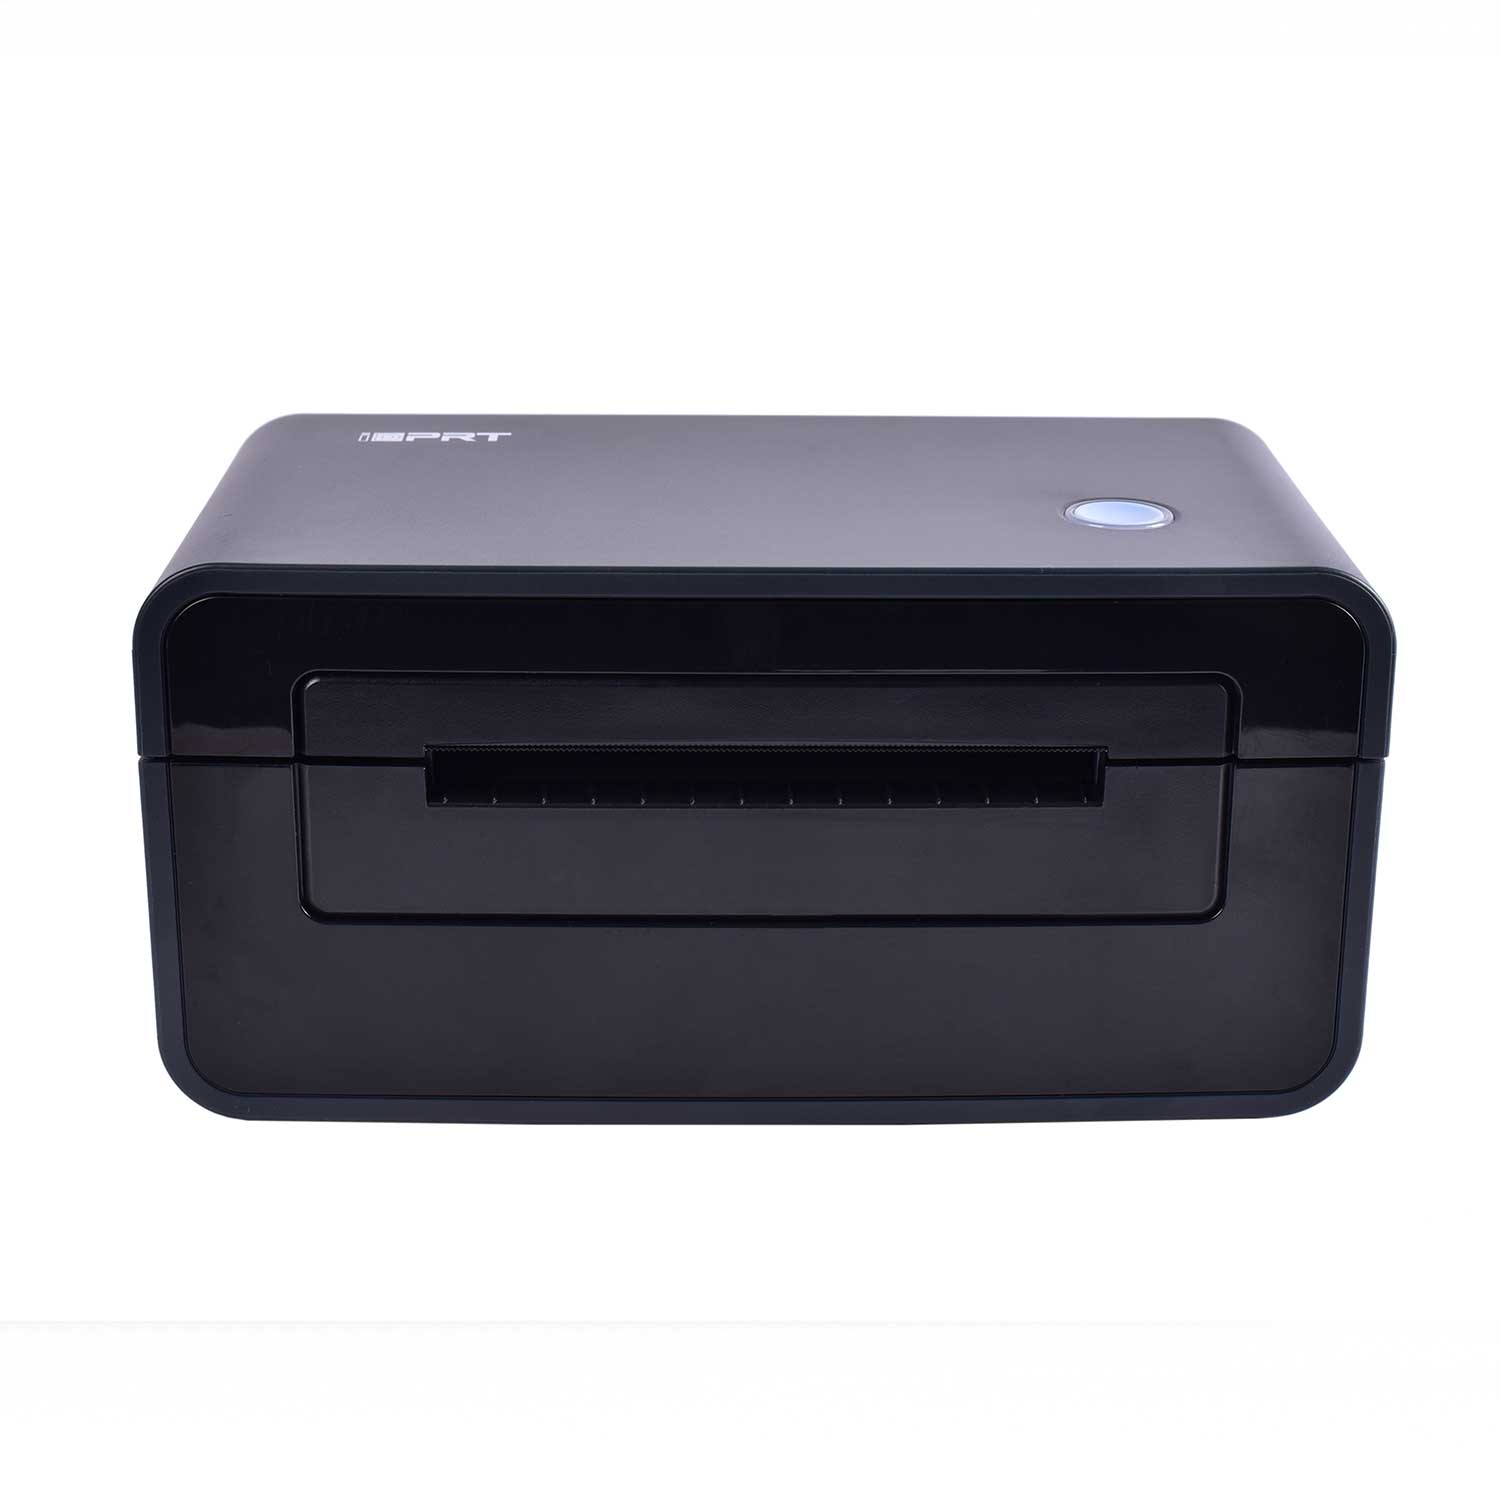 iDPRT SP410 shipping label printer.jpg